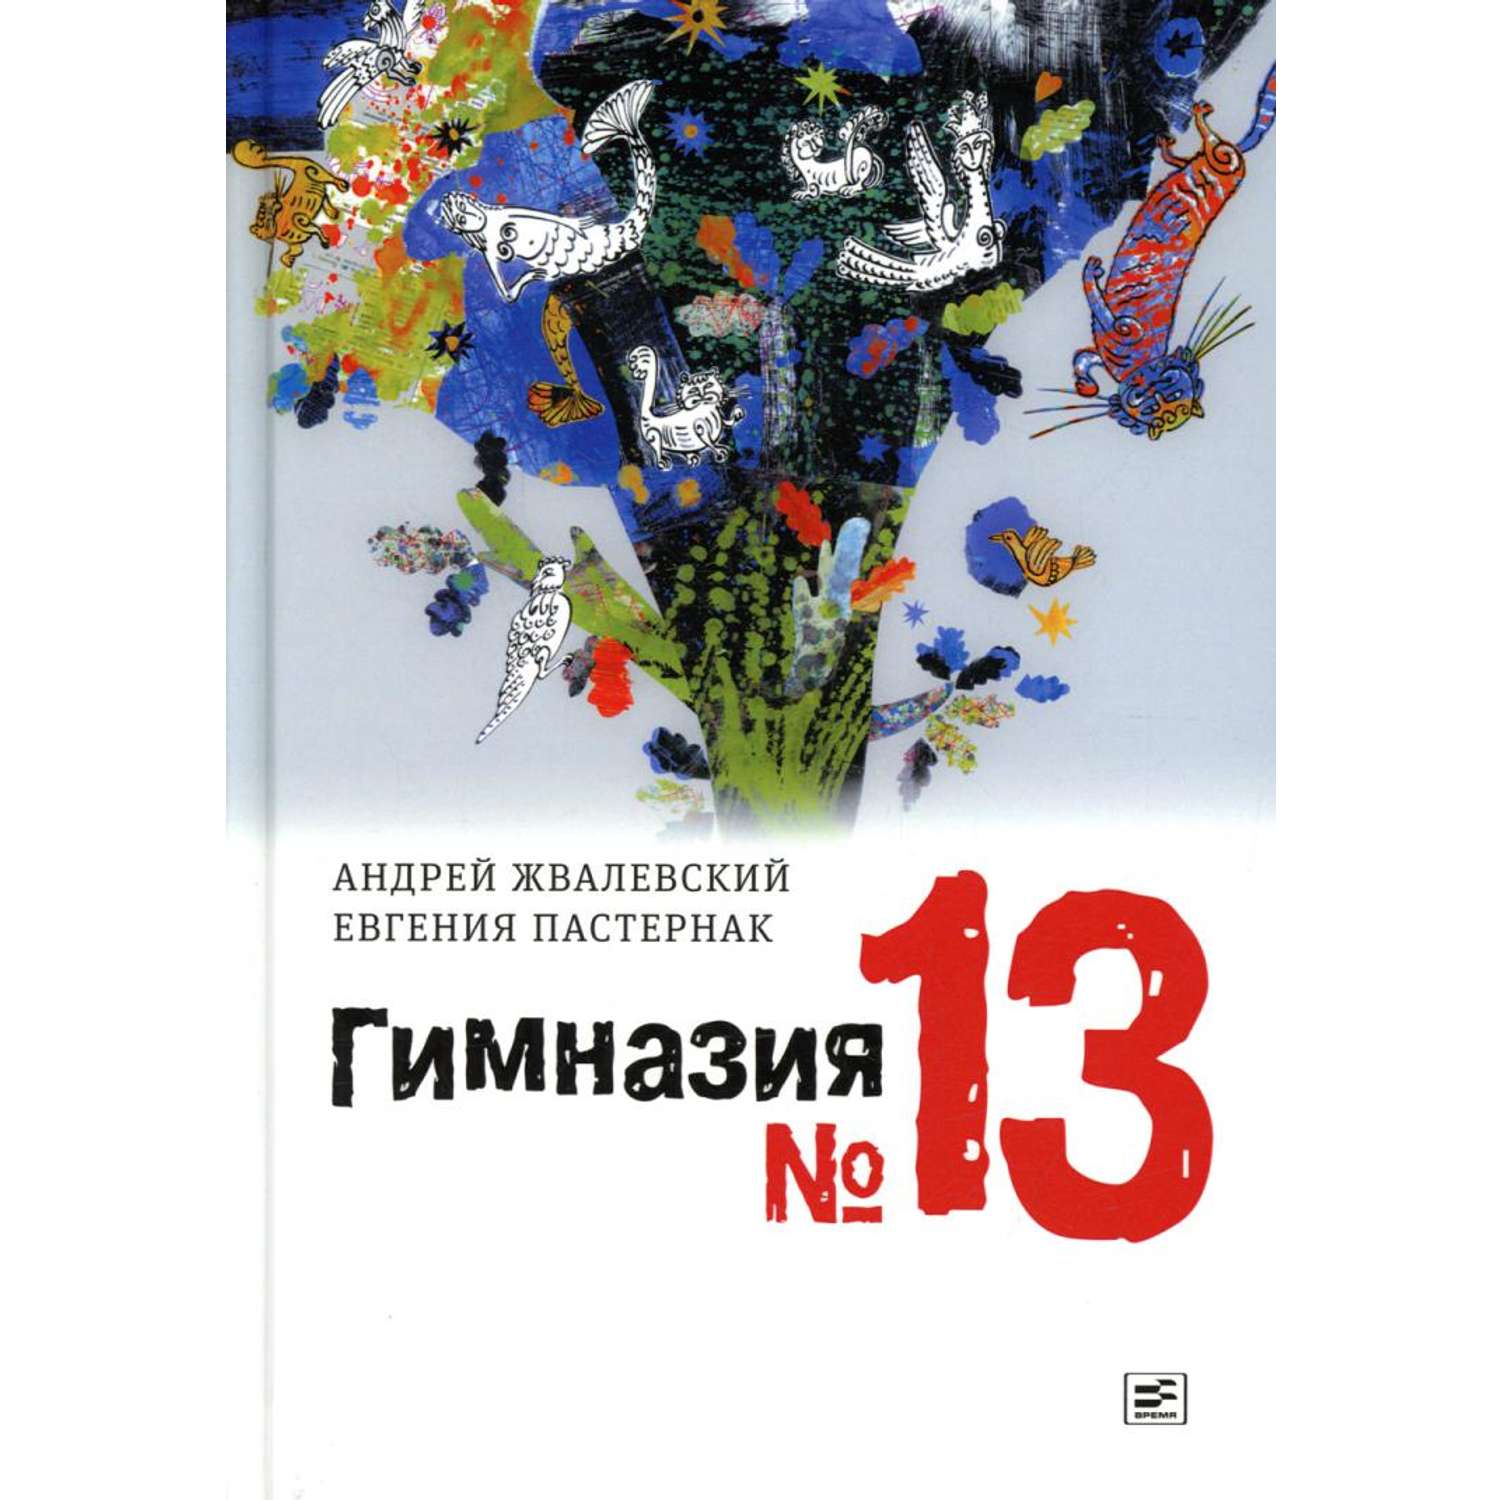 Книга Время Гимназия №13 роман-сказка 8-е издание - фото 1